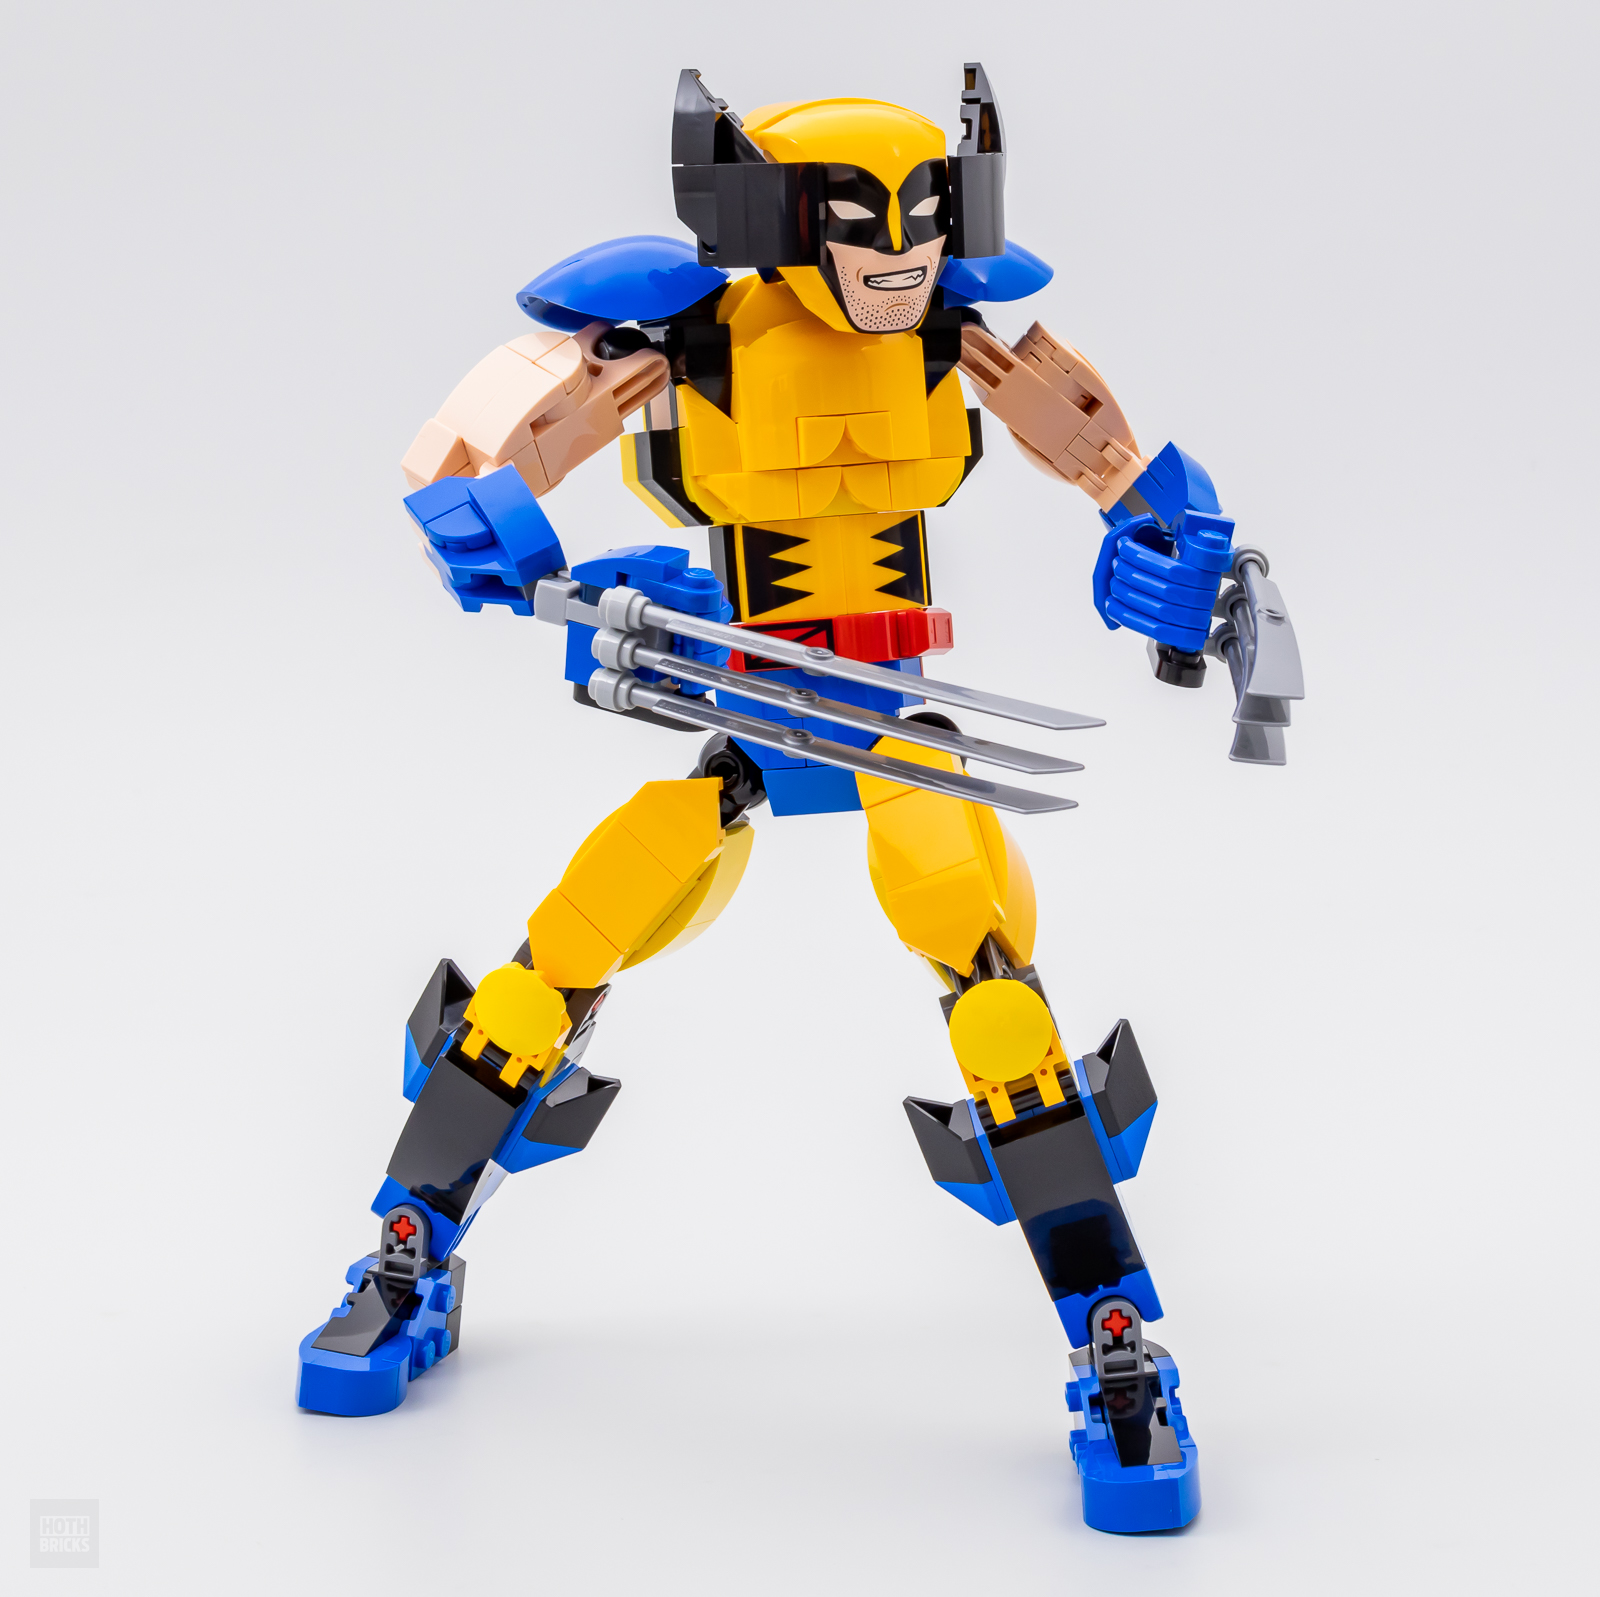 Lego Super Heroes Marvel Robo do Wolverine. A Pronta Entrega!